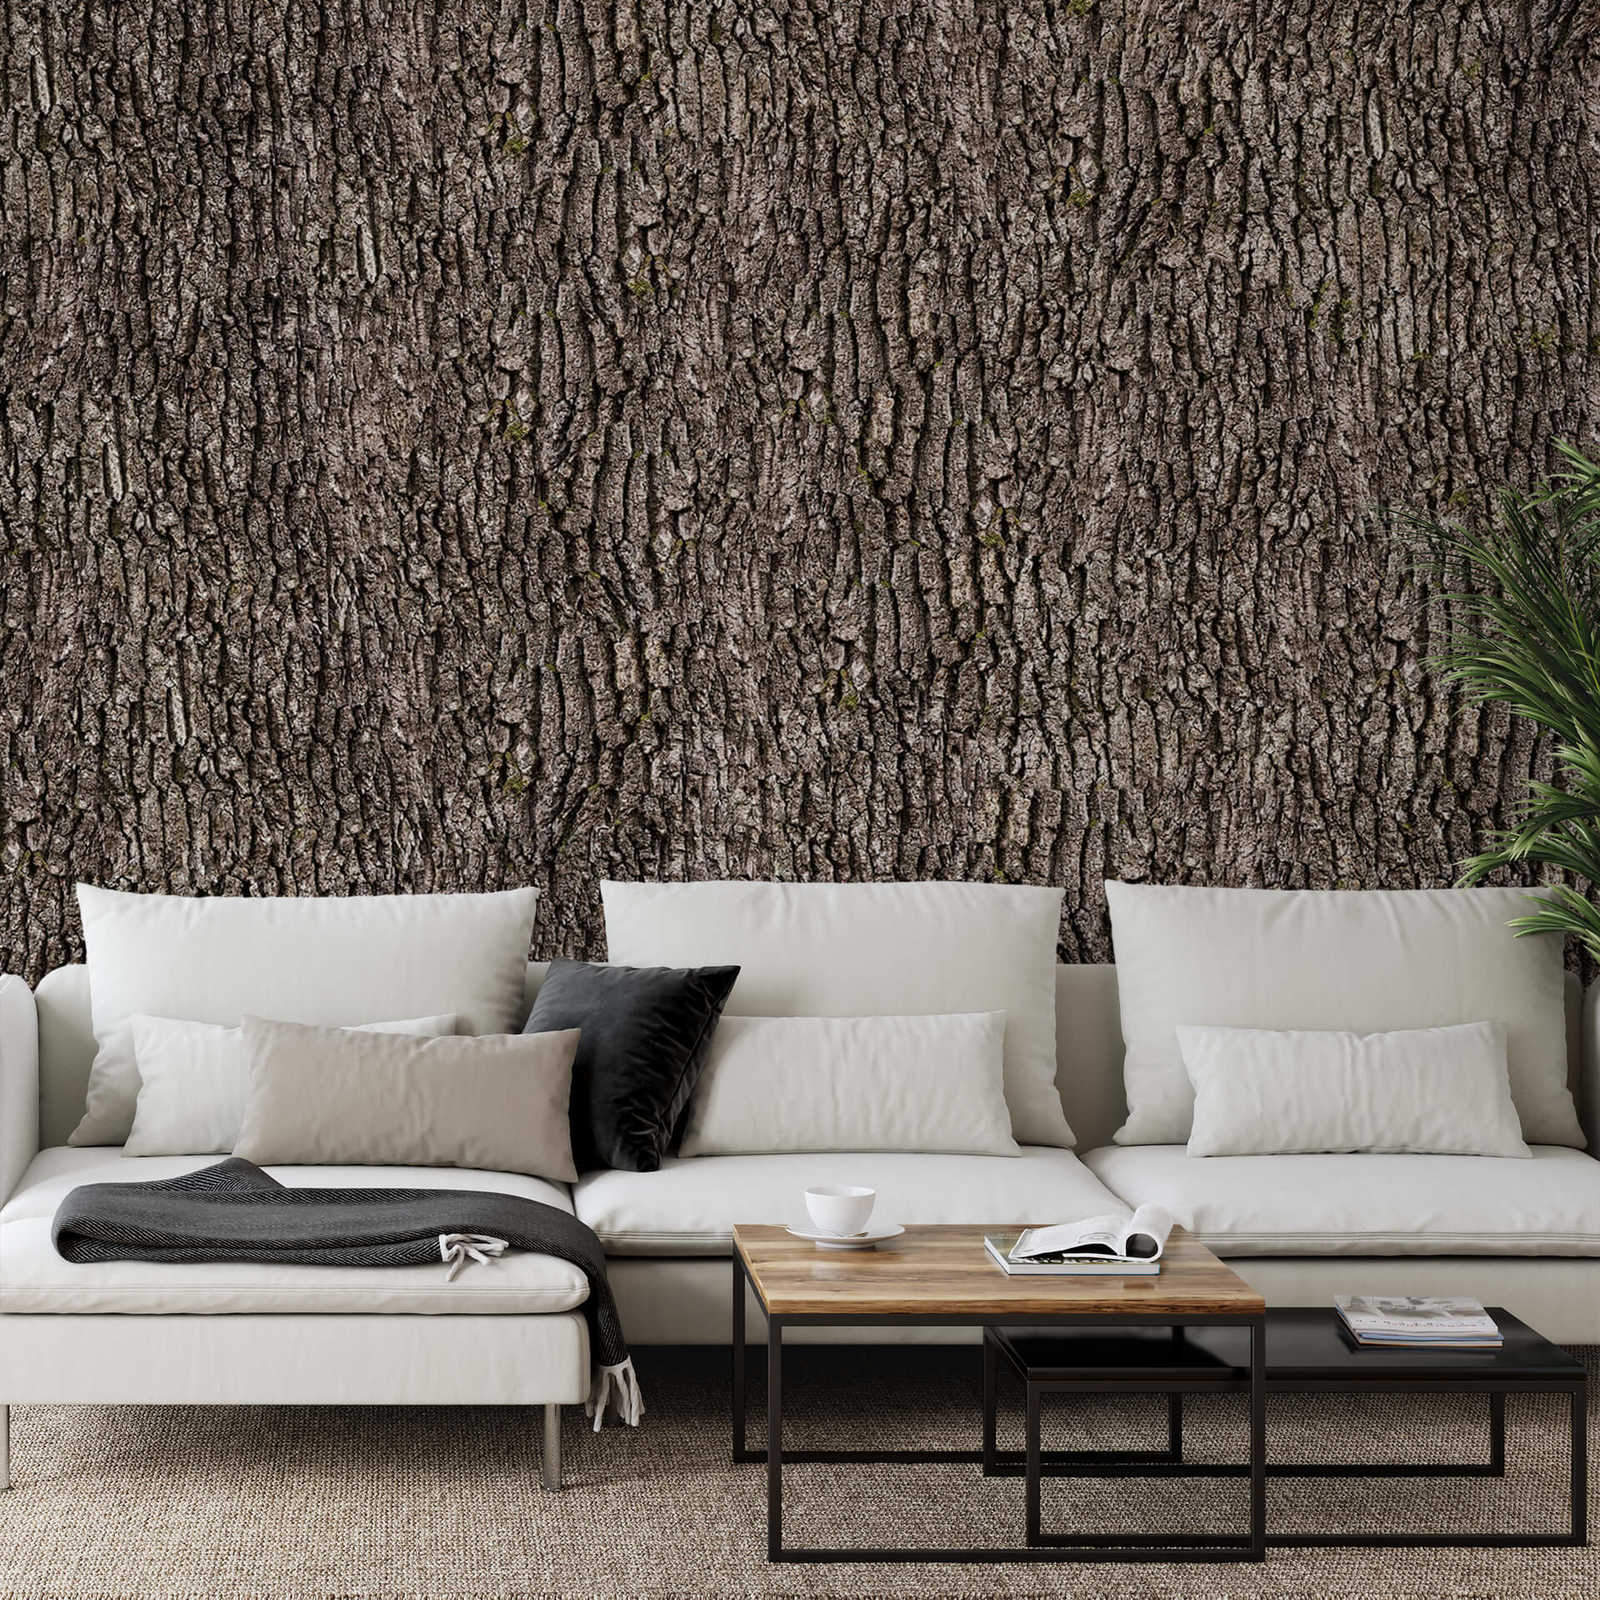             Bark wall on photo wallpaper - Brown, Grey
        